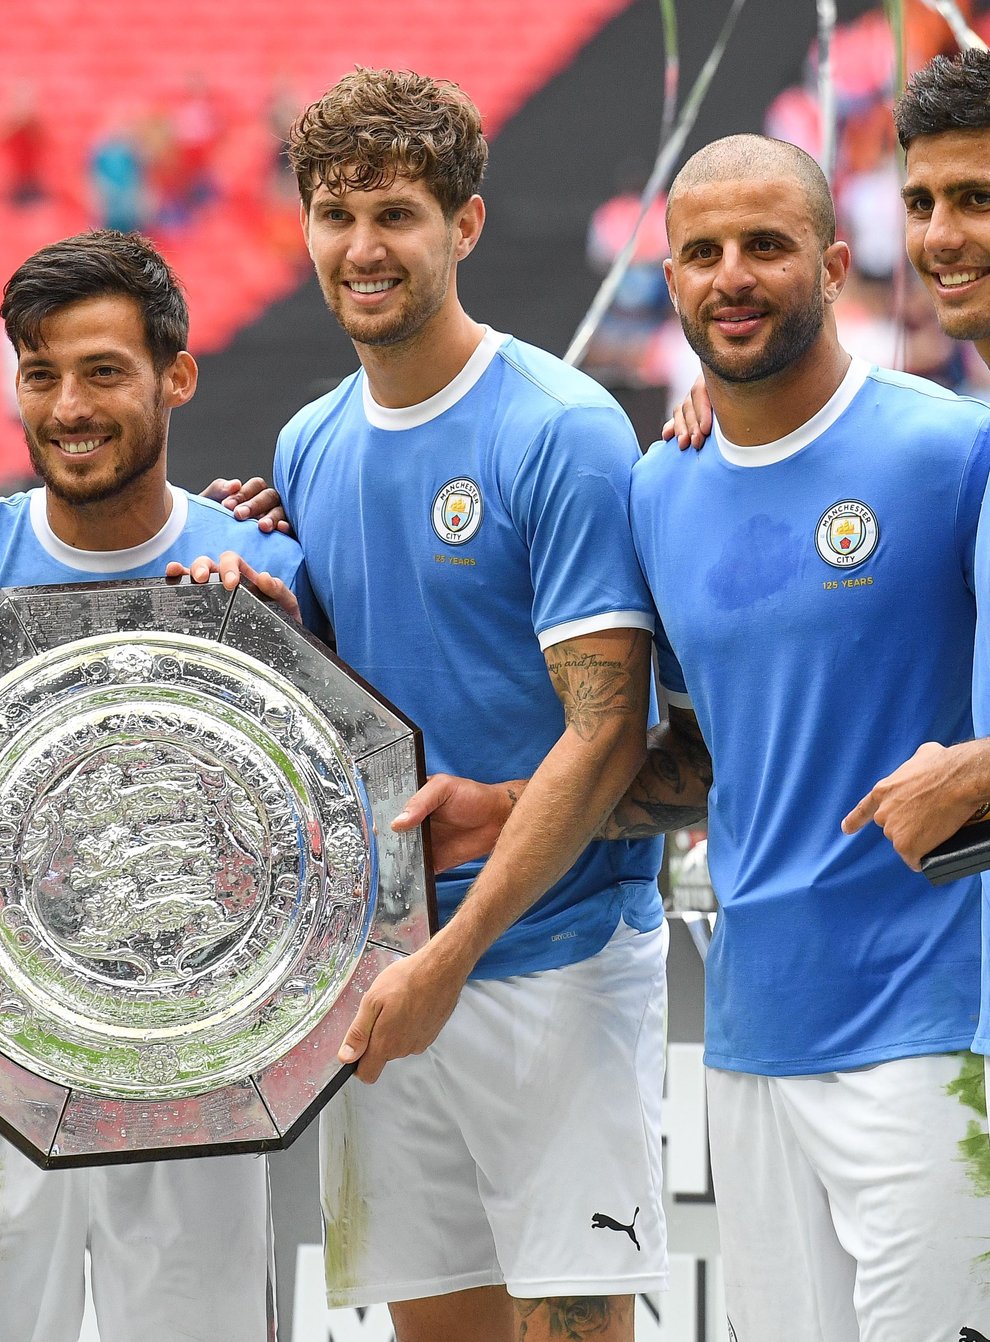 Manchester City won the 2019 Community Shield at Wembley (PA Images)